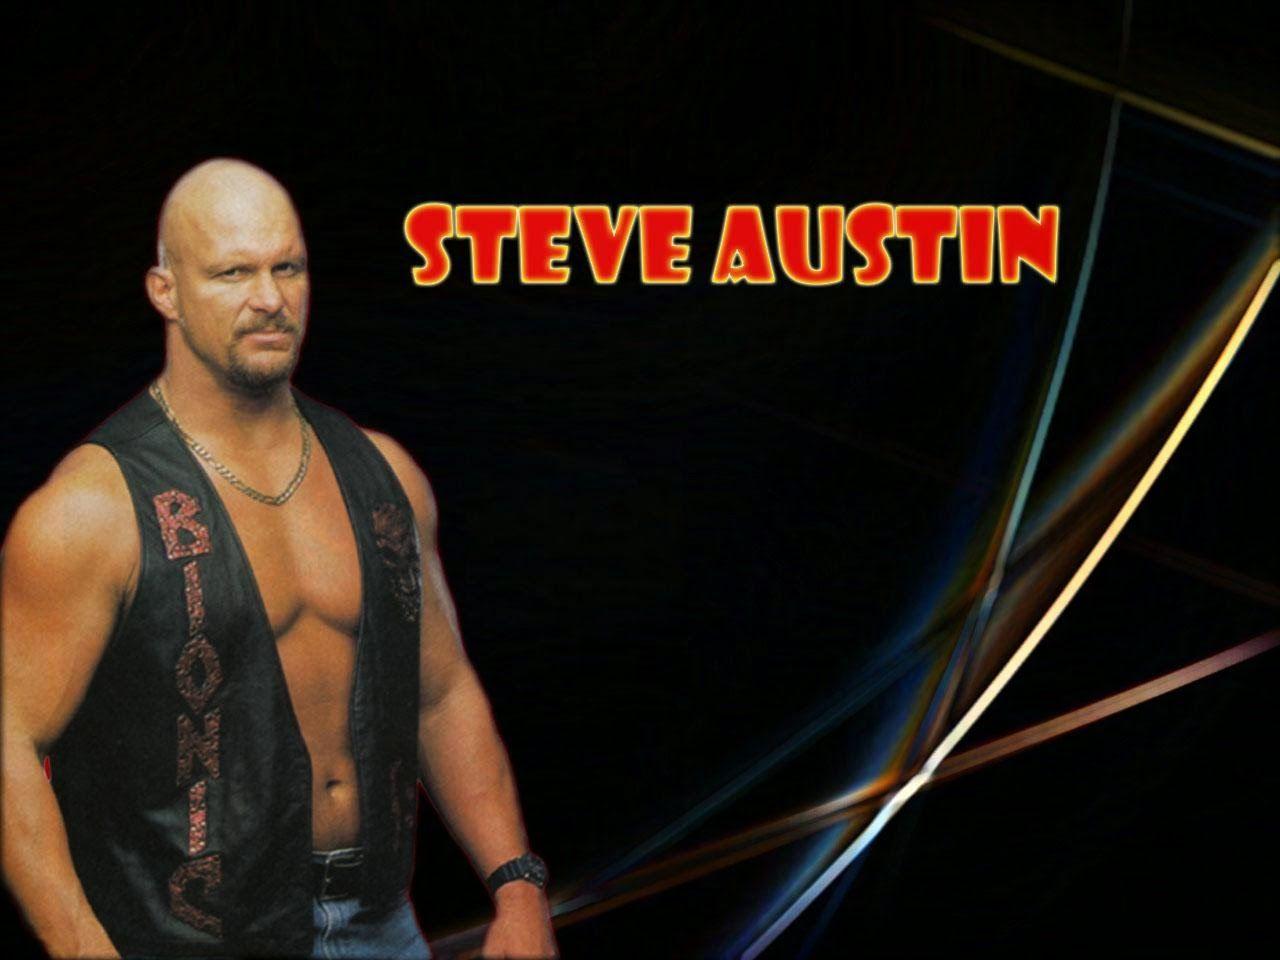 Stone Cold Steve Austin HD Wallpaper Free Download. WWE HD